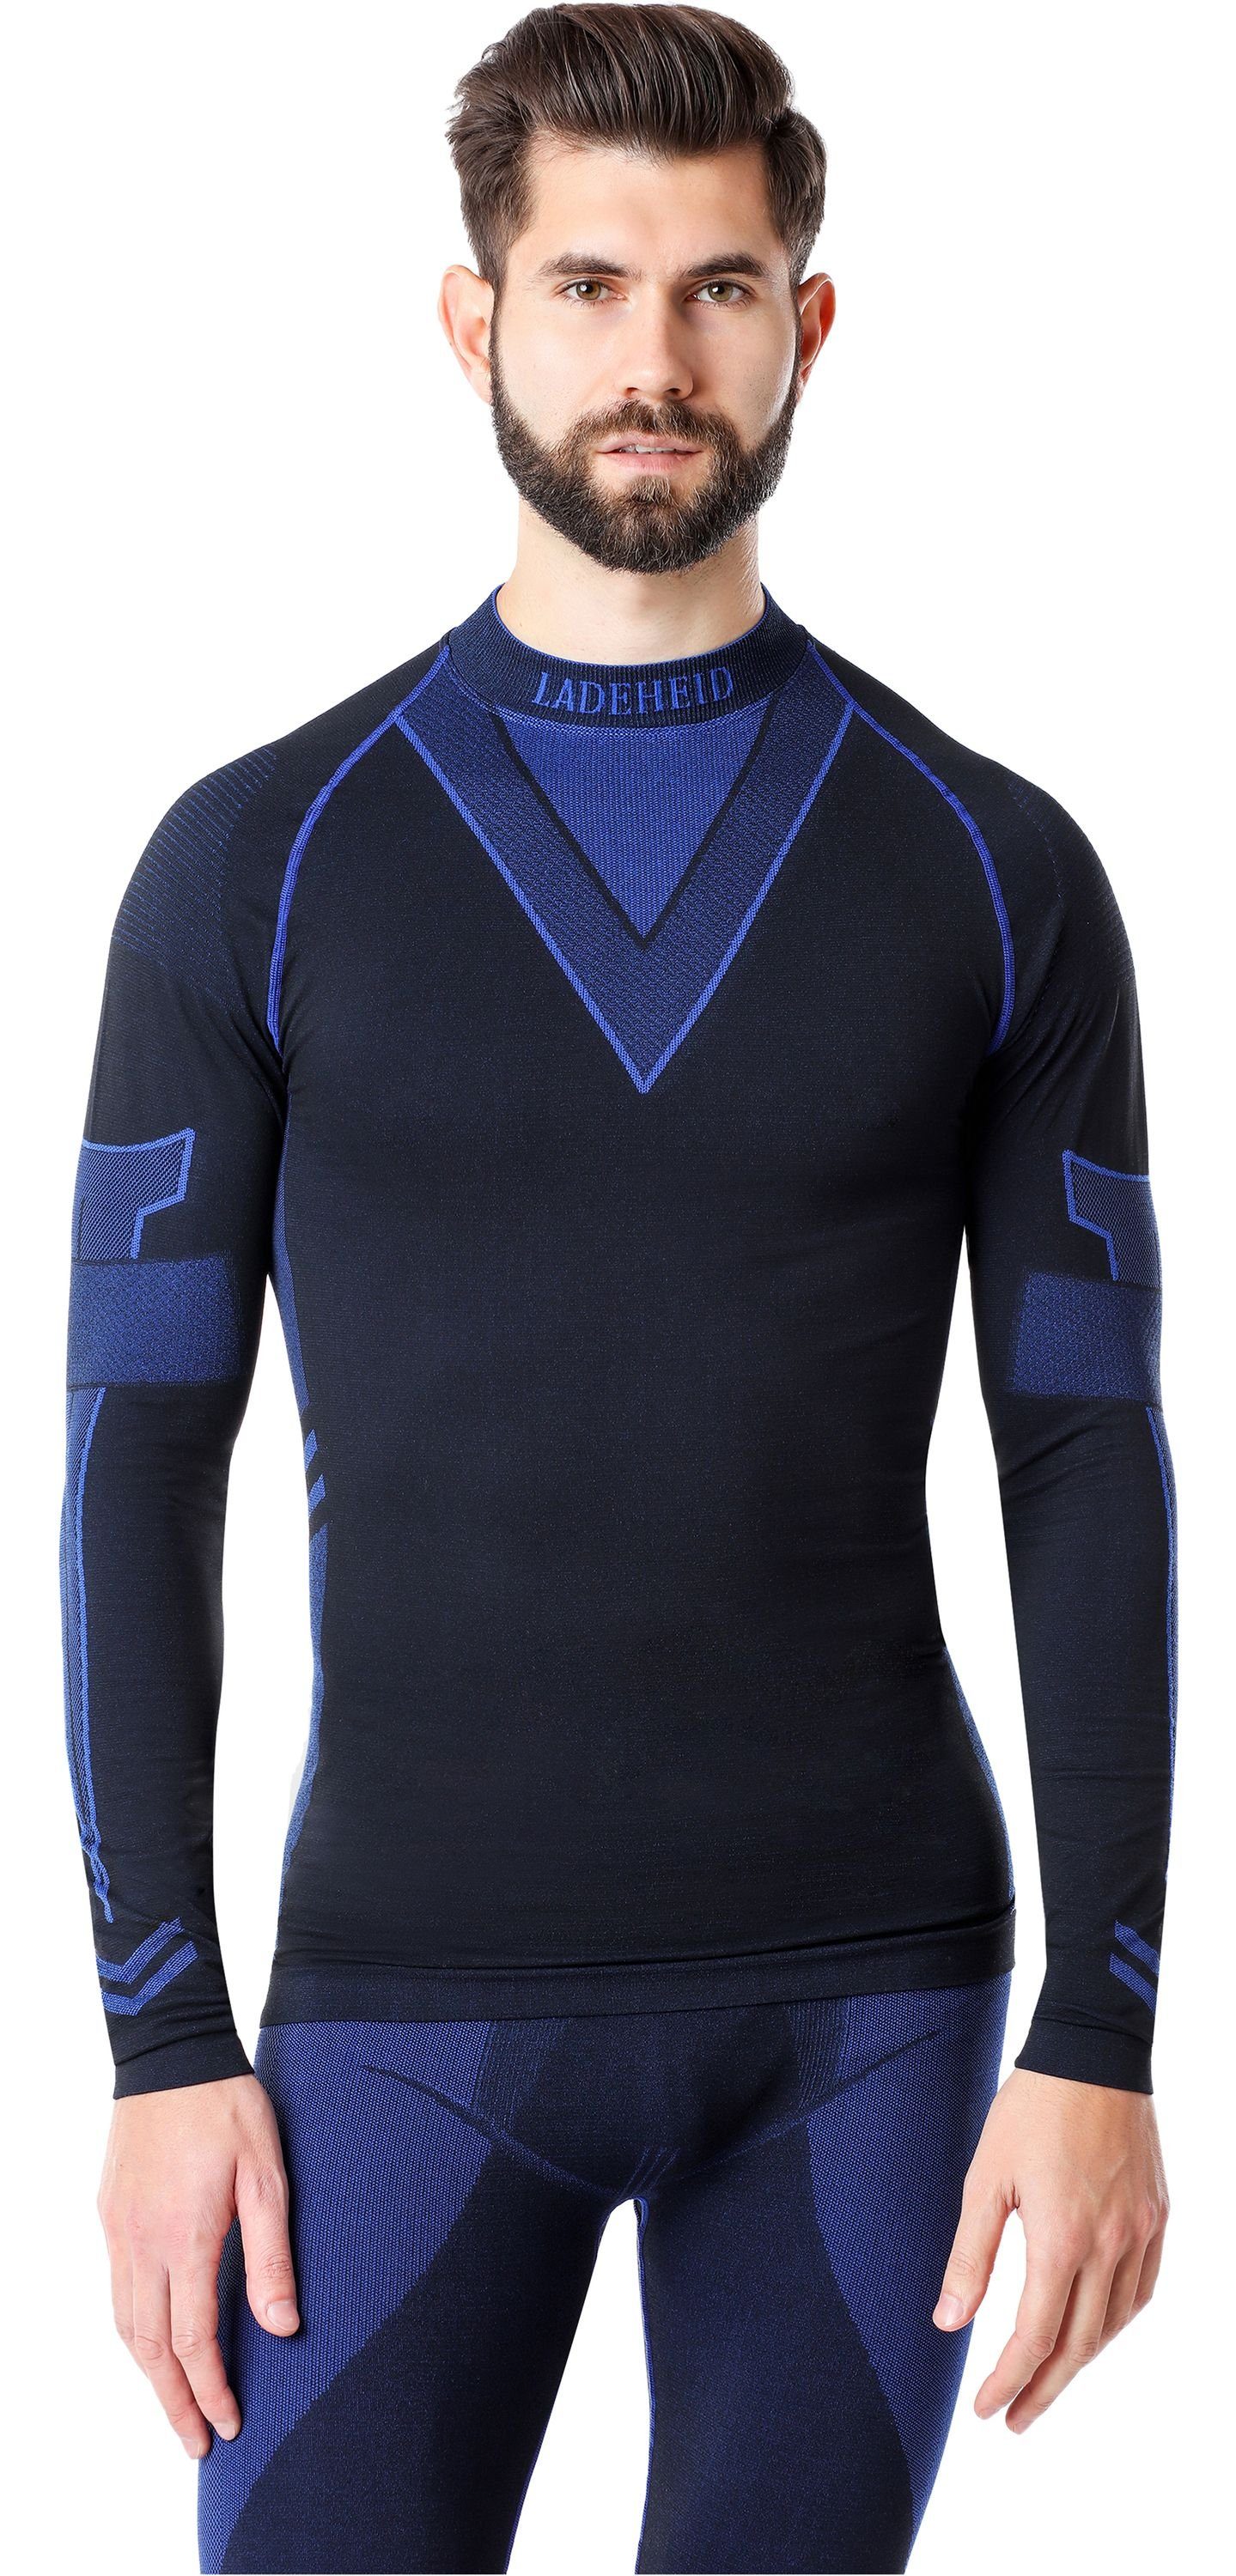 Ladeheid Funktionsunterhemd Herren Funktionsunterwäsche langarm Shirt Thermoaktiv LAGI001 Schwarz/Marineblau